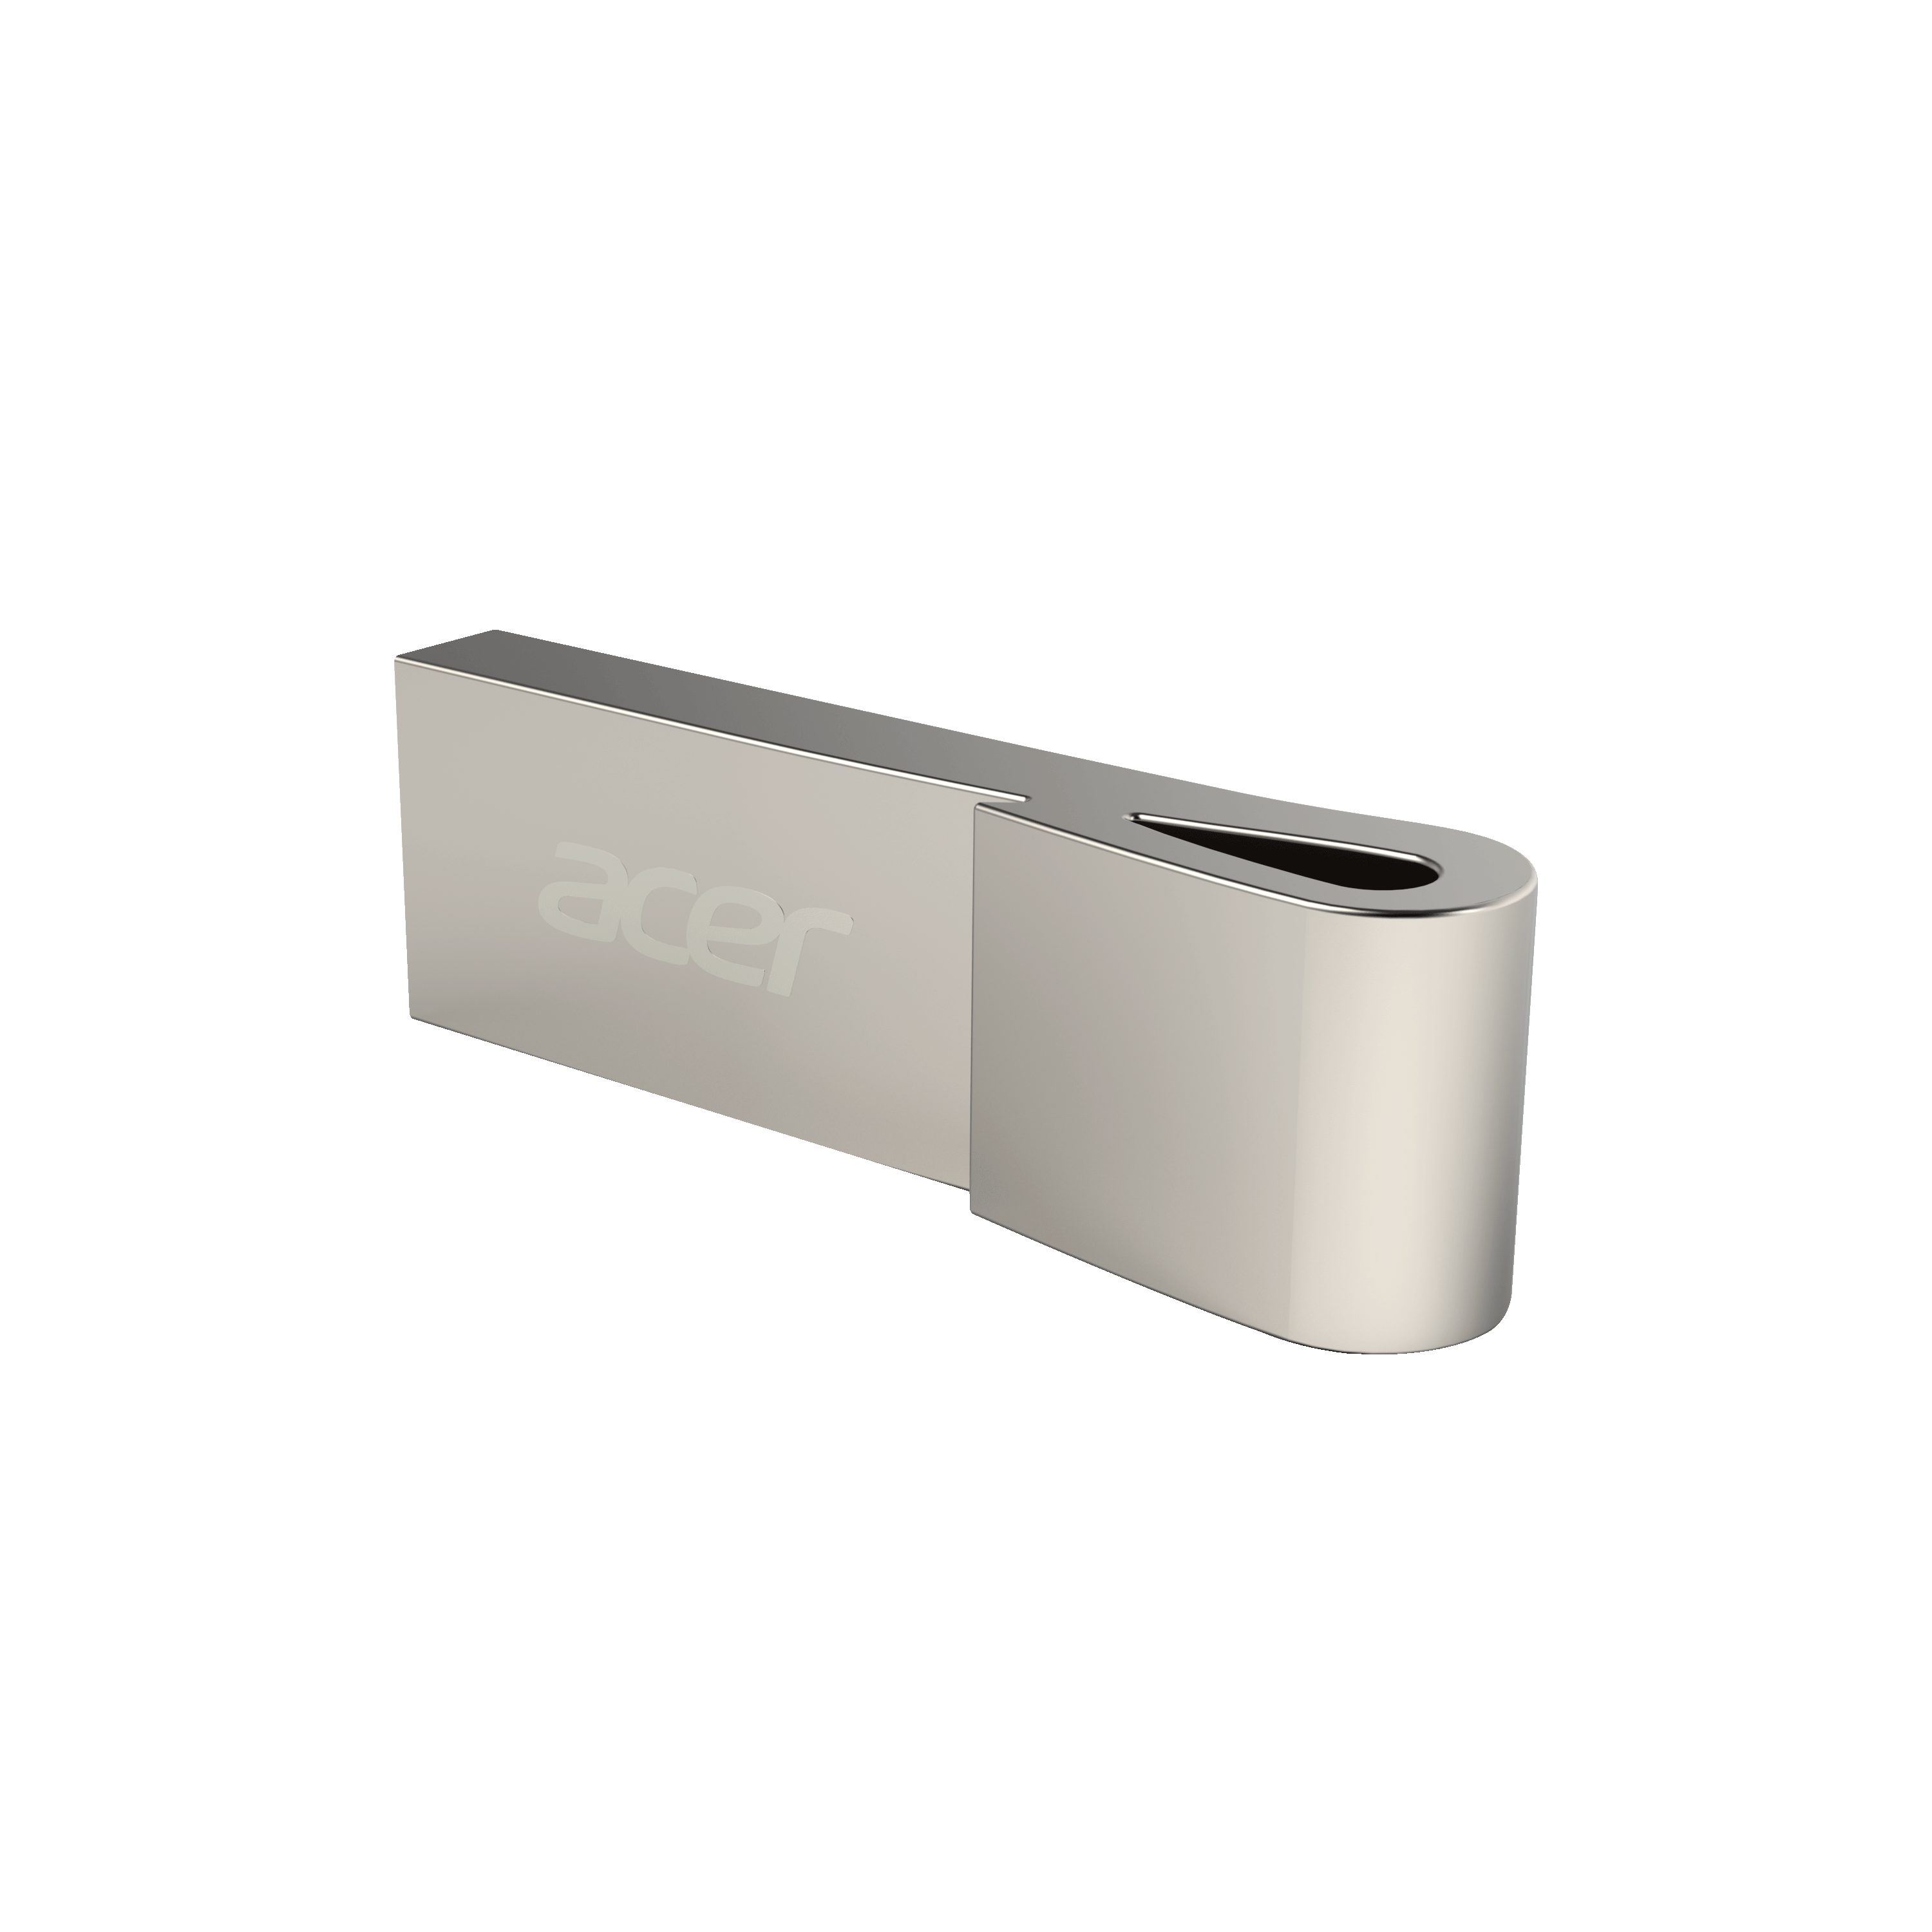 Acer USB Flash Drive